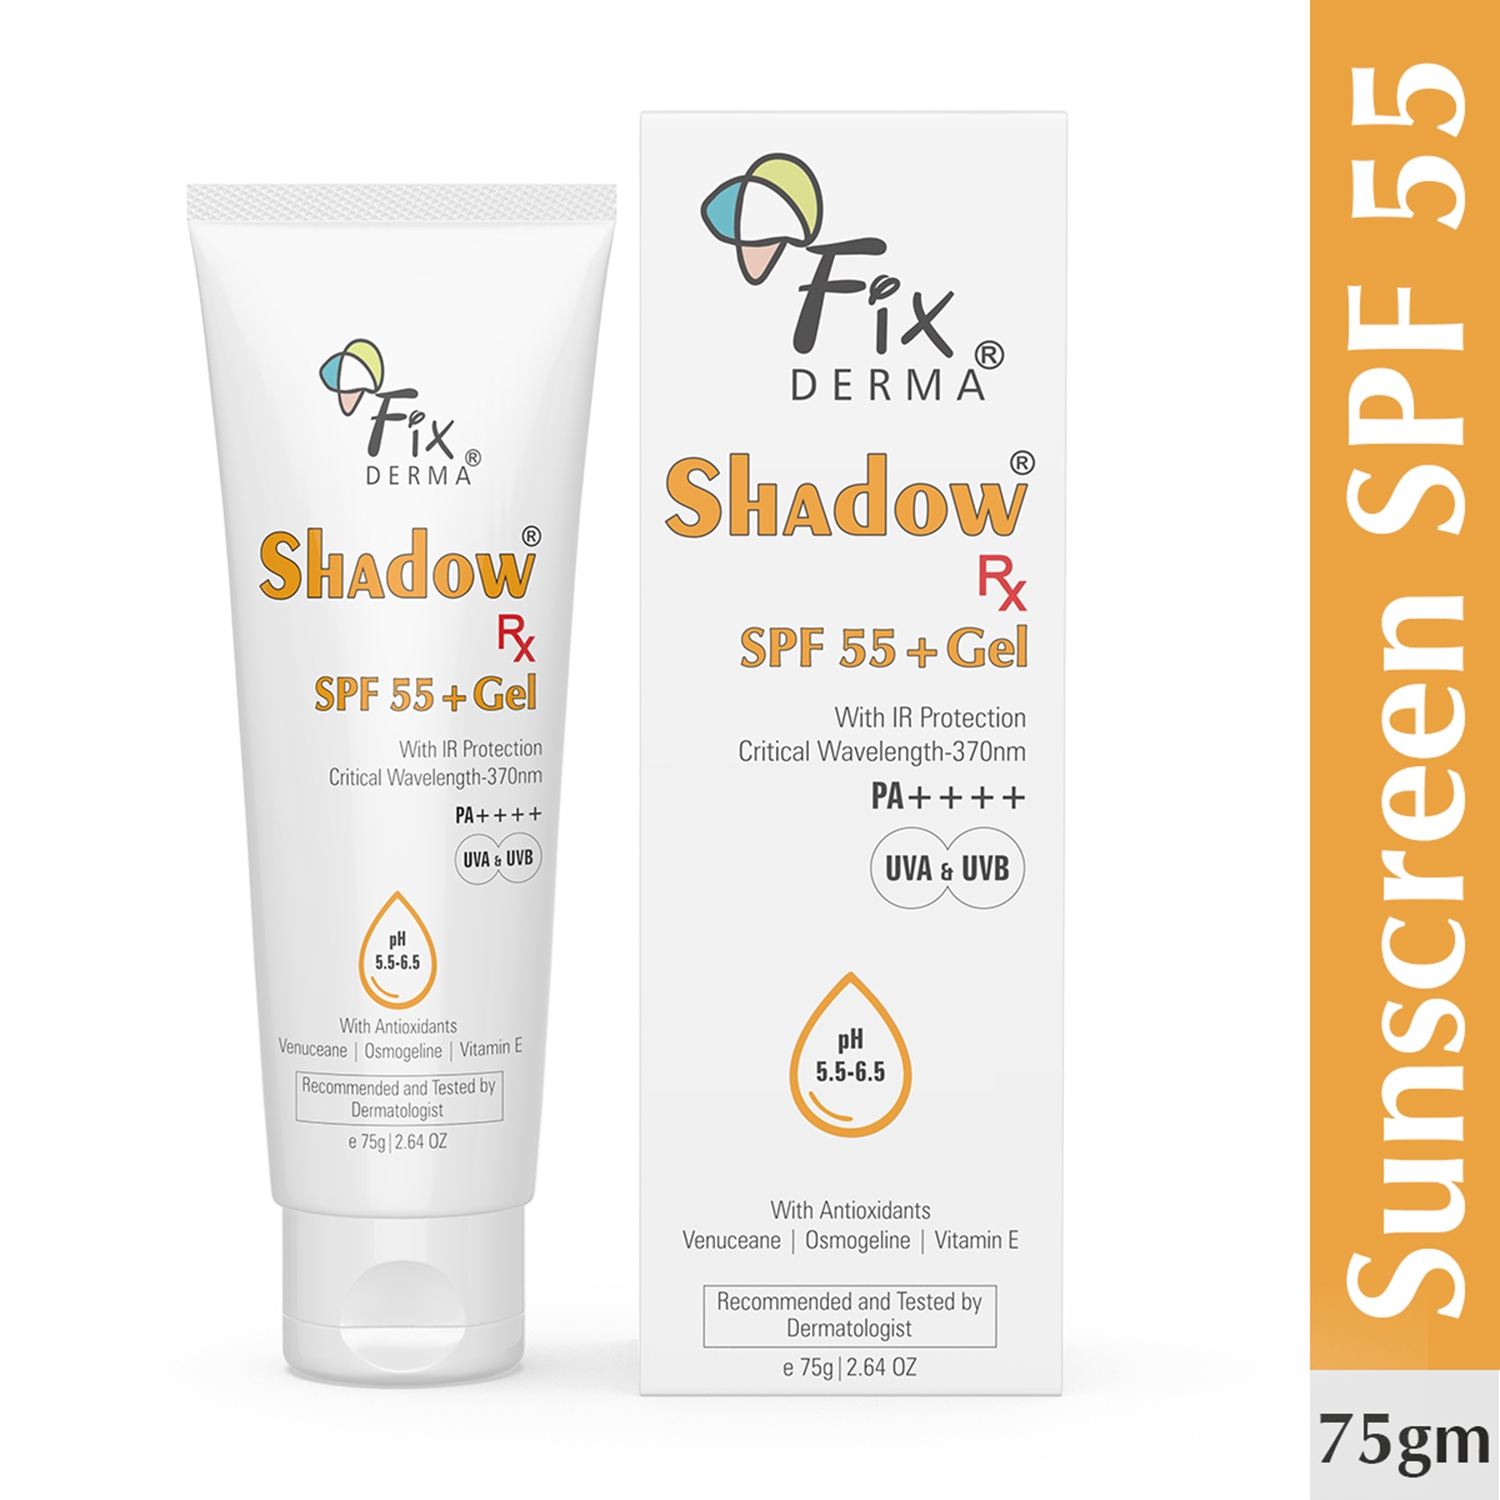 Fixderma | Fixderma Shadow RX Sunscreen Gel SPF 55+ PA+++ UVA & UVB with IR Protection & Vitamin E (75g)